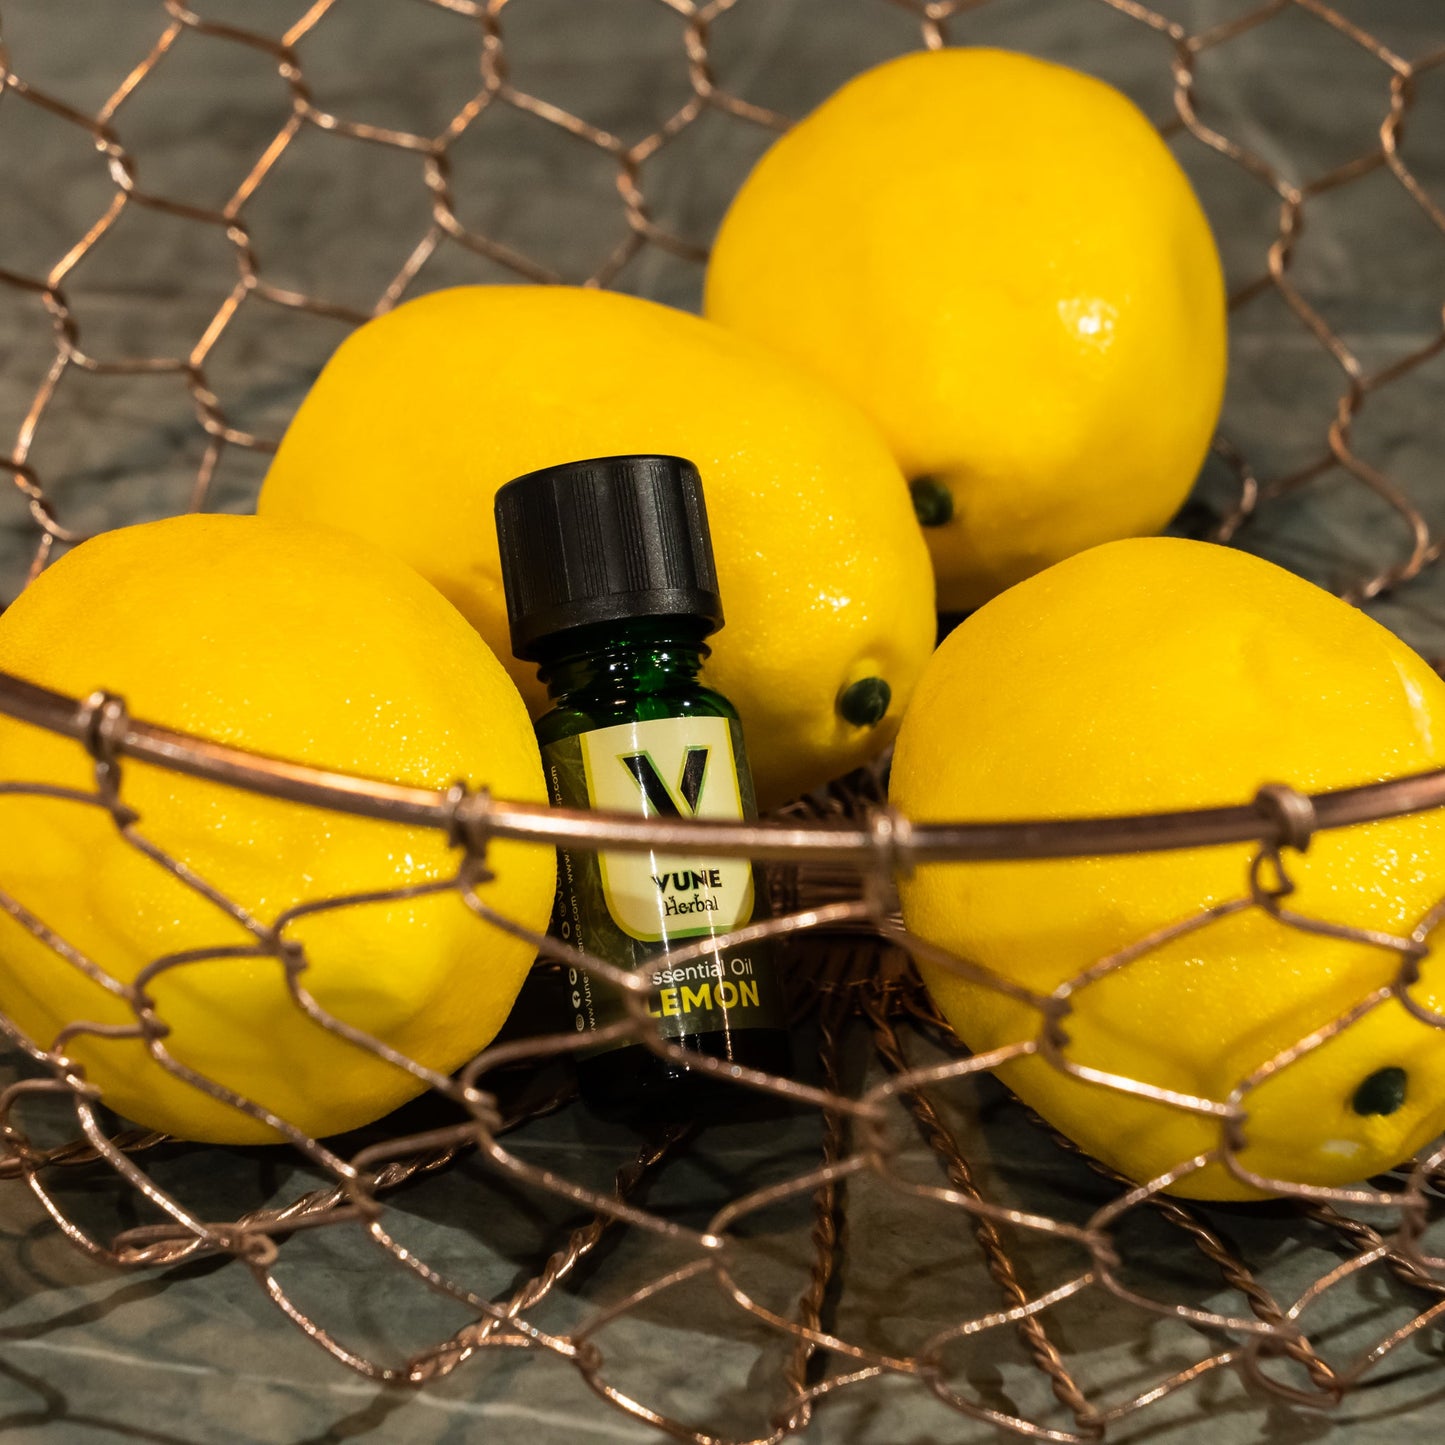 Vune Herbal Lemon Essential Oil